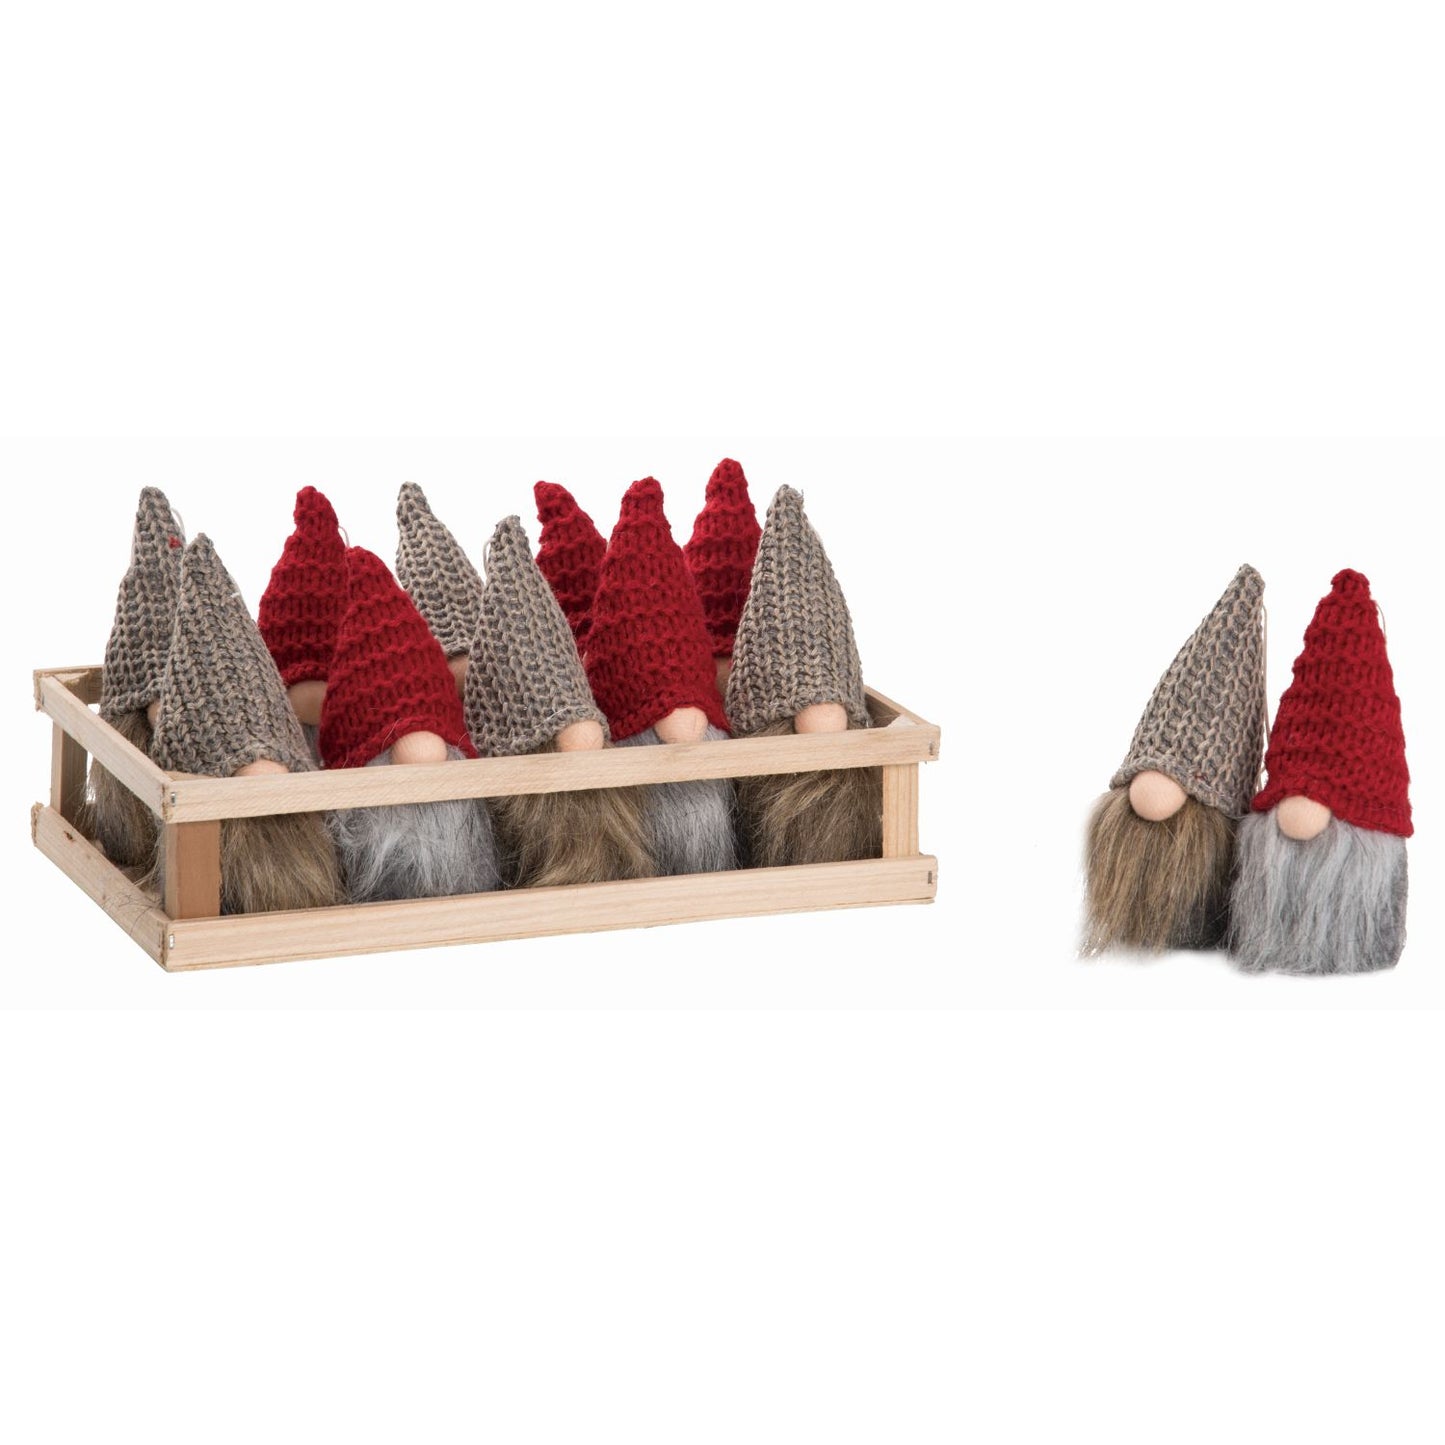 Transpac Plush Santa Gnome Ornaments In Crate, Set Of 12